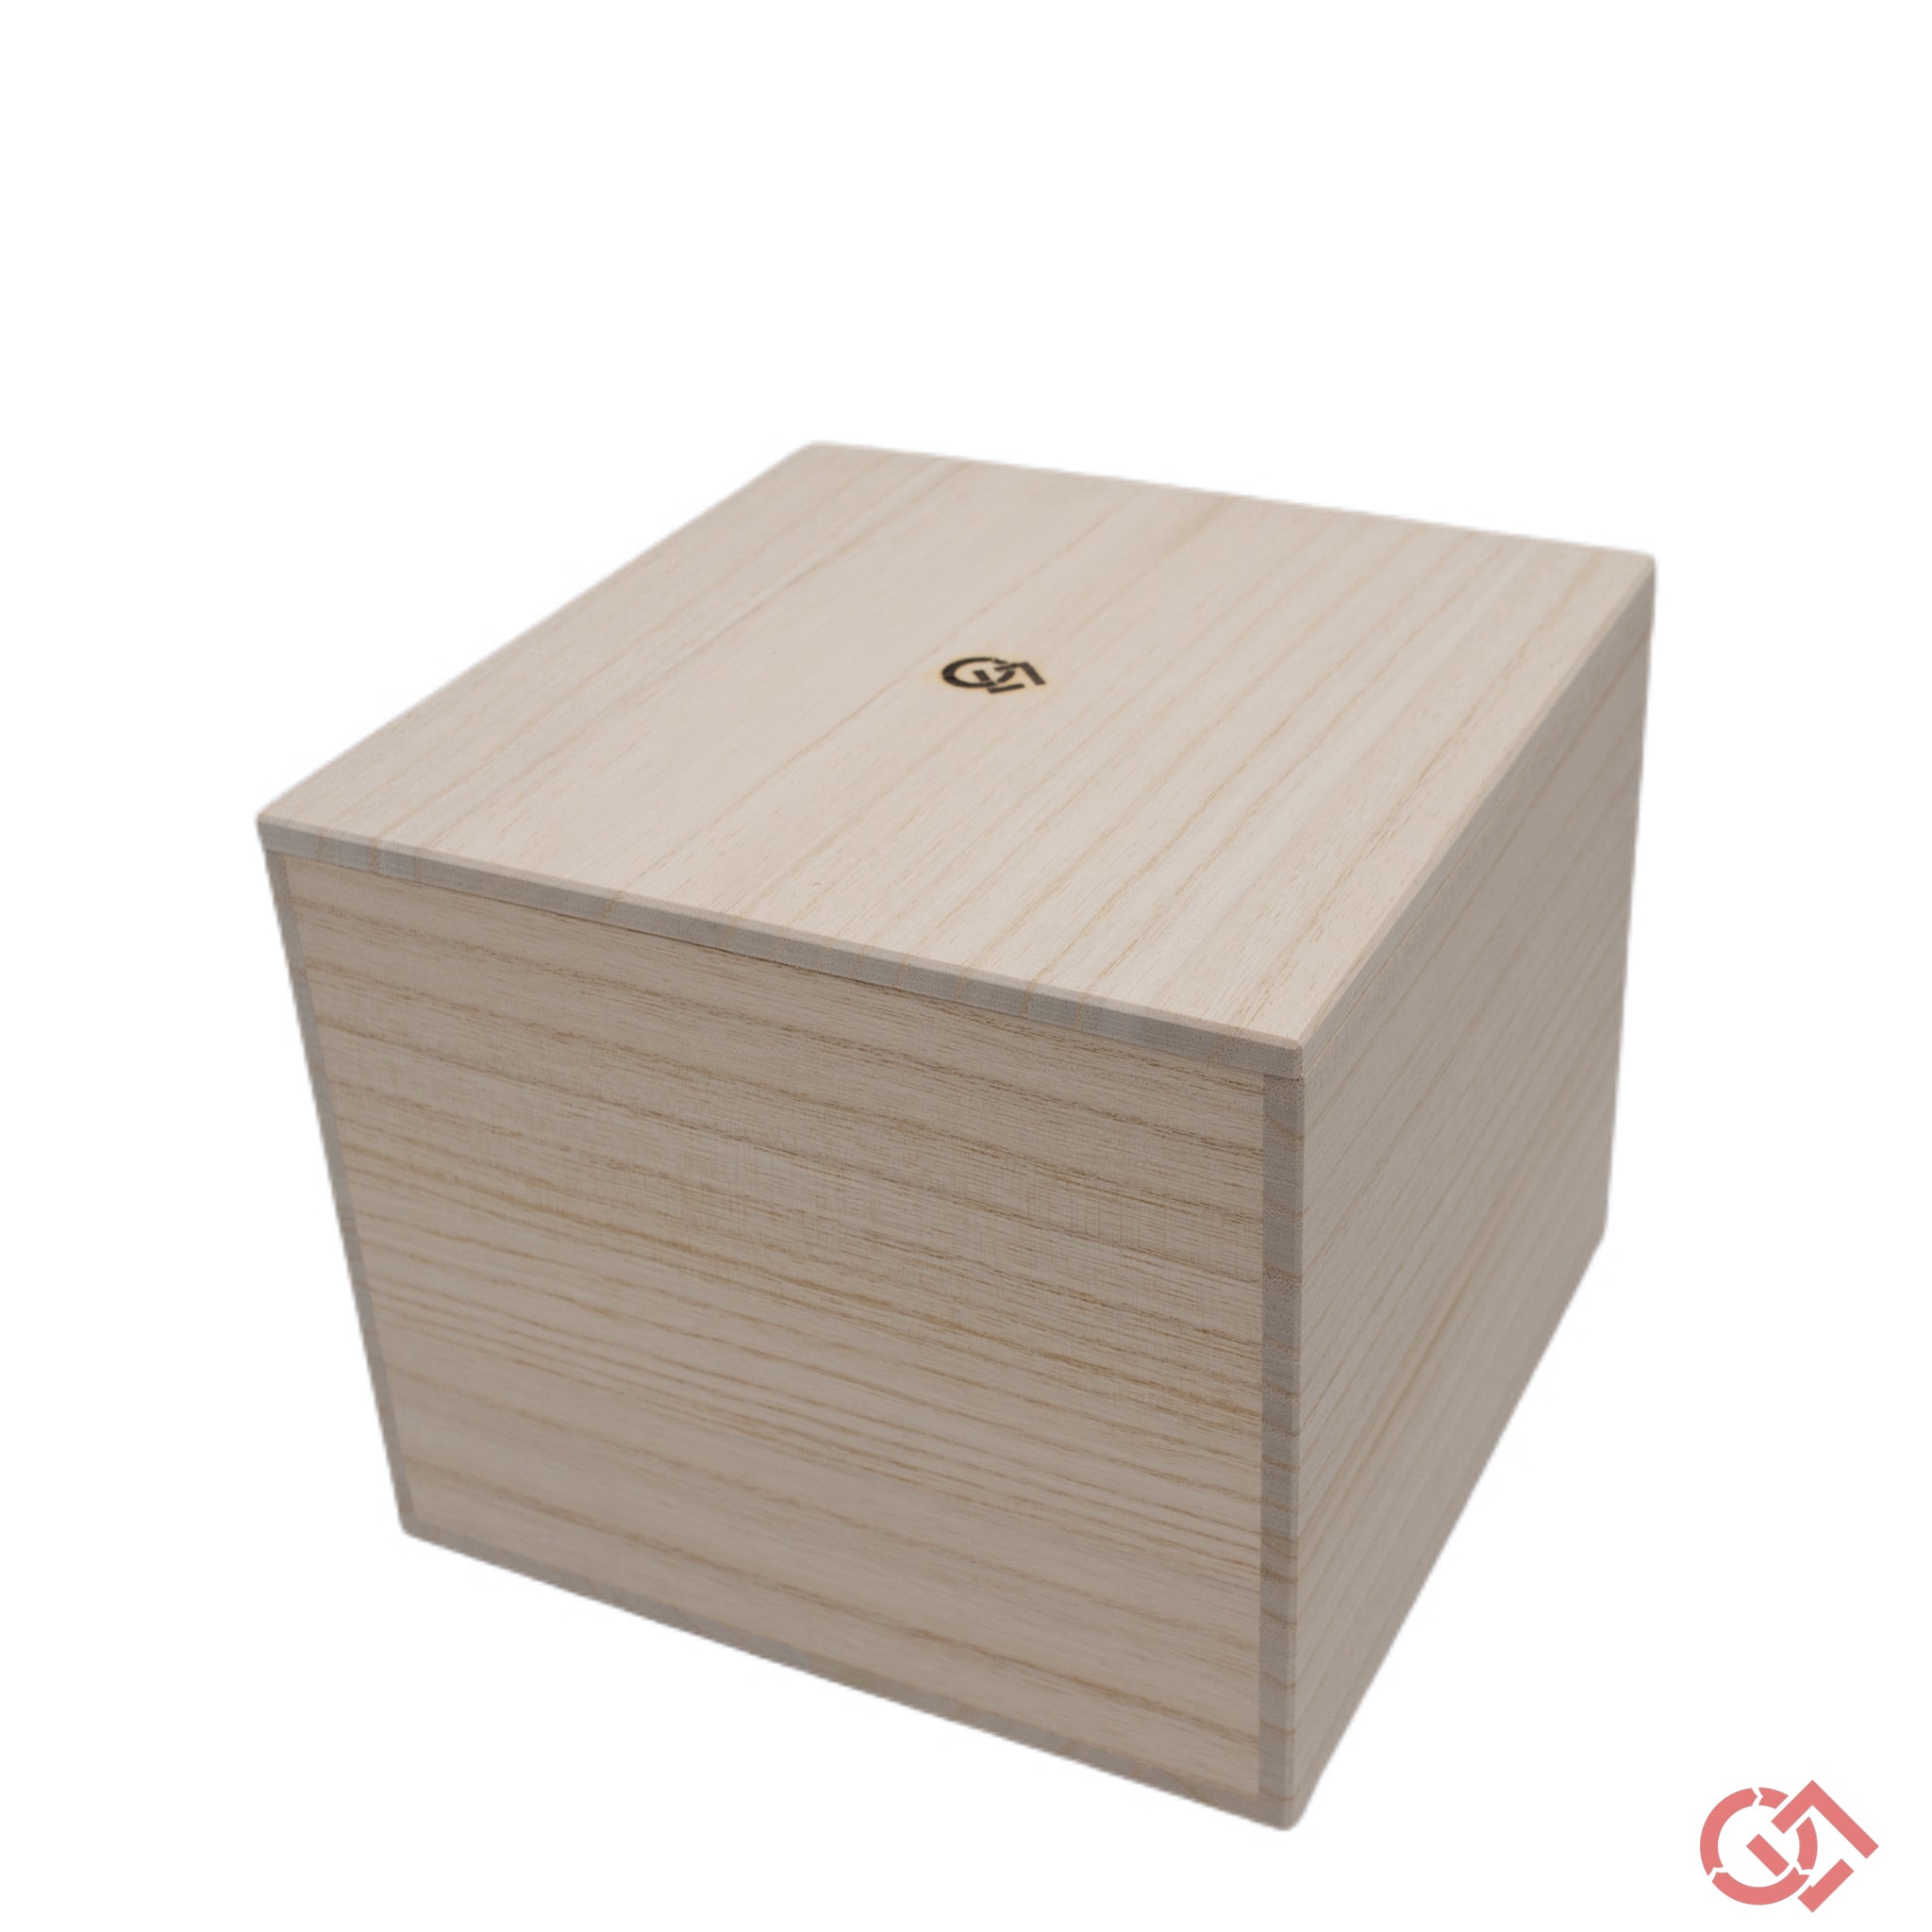 Paulownia wood box for Kintsugi